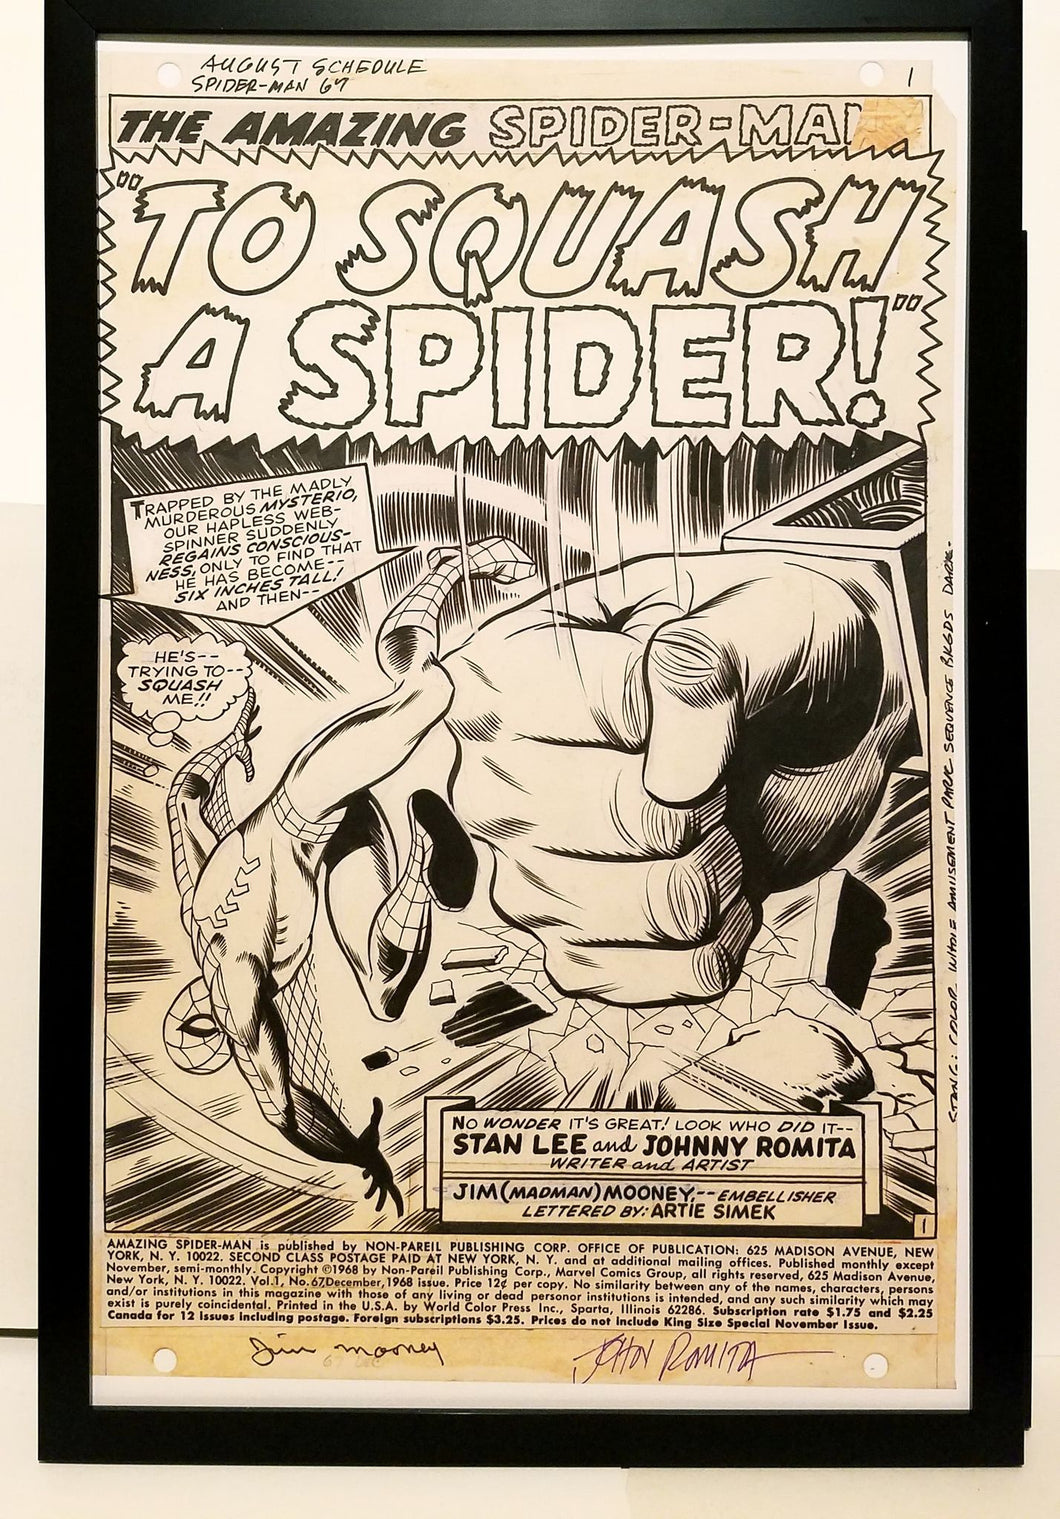 Amazing Spider-Man #67 pg. 1 John Romita 11x17 FRAMED Original Art Poster Marvel Comics